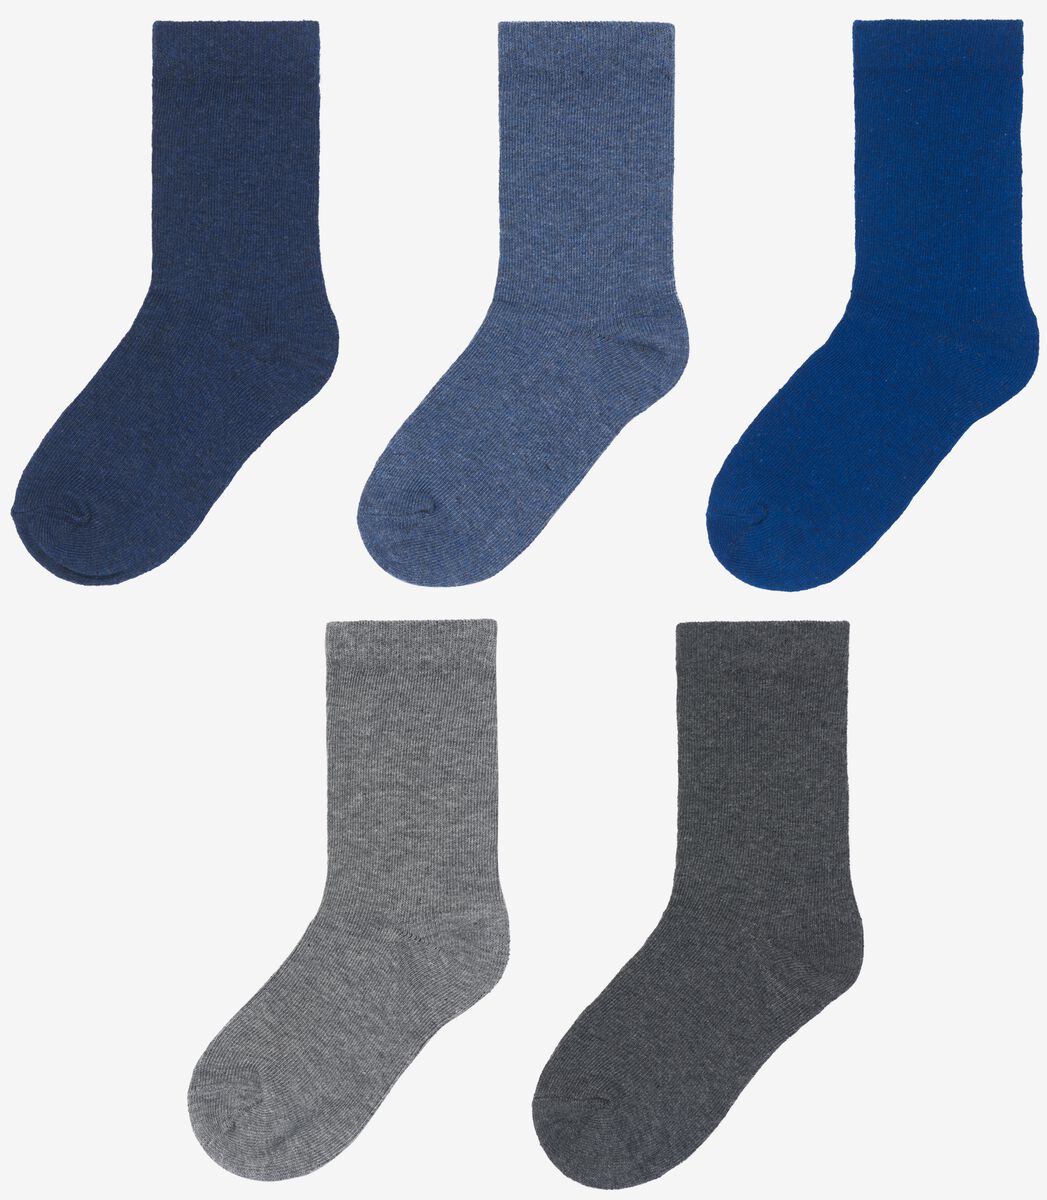 Kinder-Socken mit Baumwolle, 5 Paar blau blau - 1000028427 - HEMA